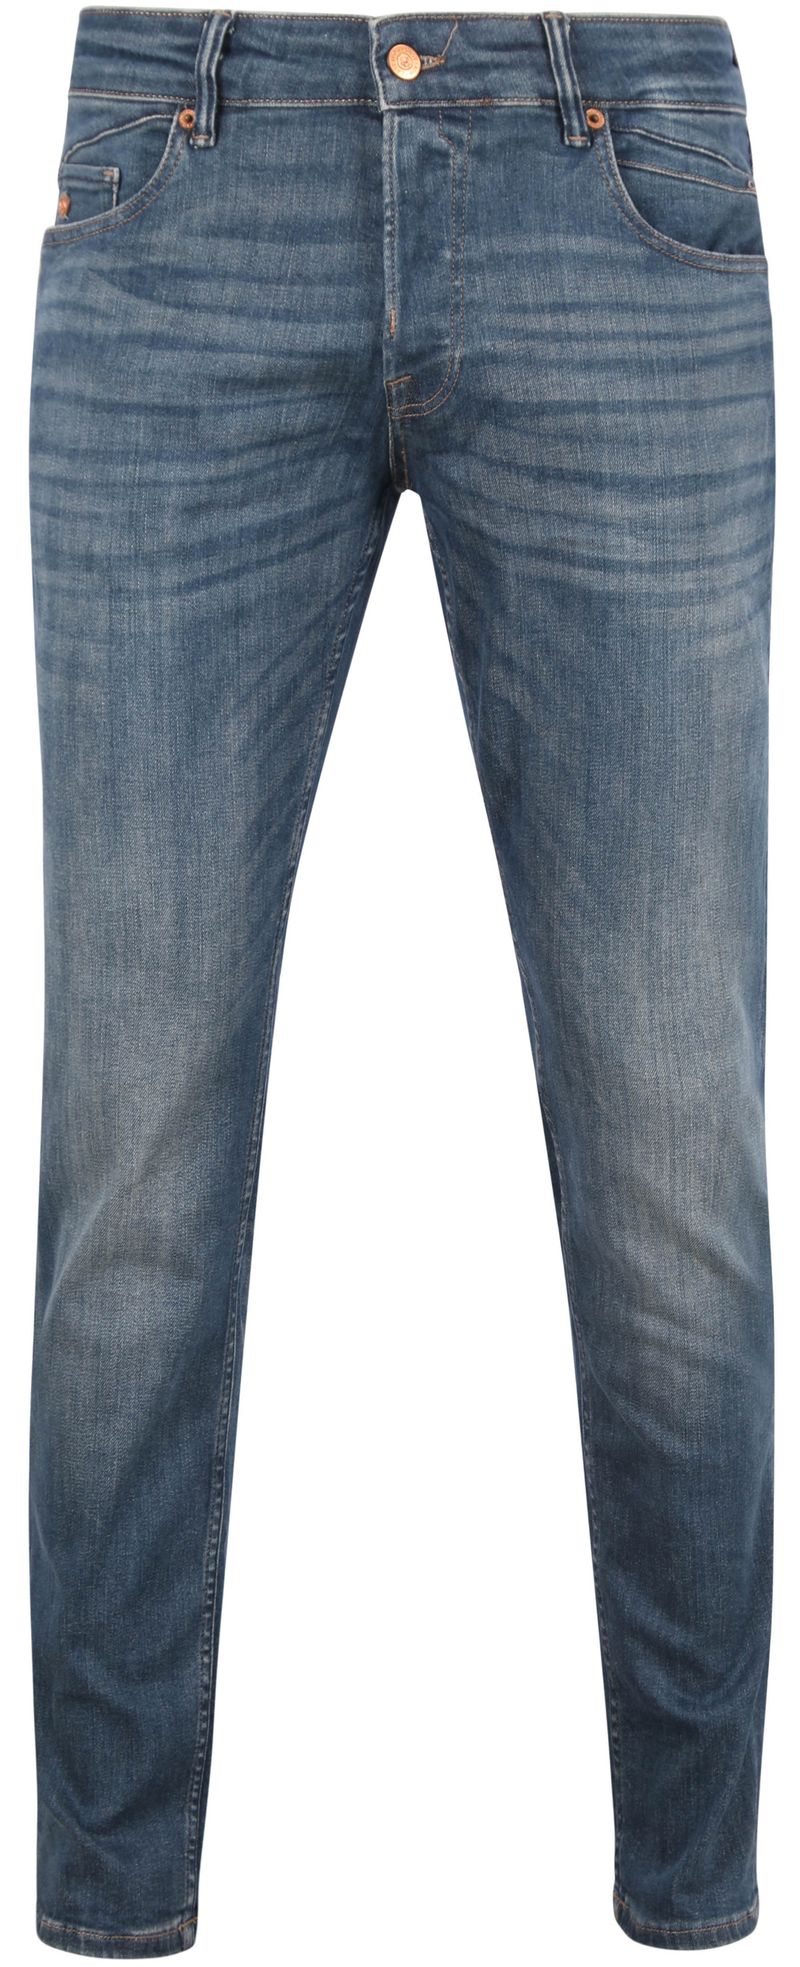 Cast Iron Shiftback Jeans Blau NBD - Größe W 33 - L 34 von Cast Iron